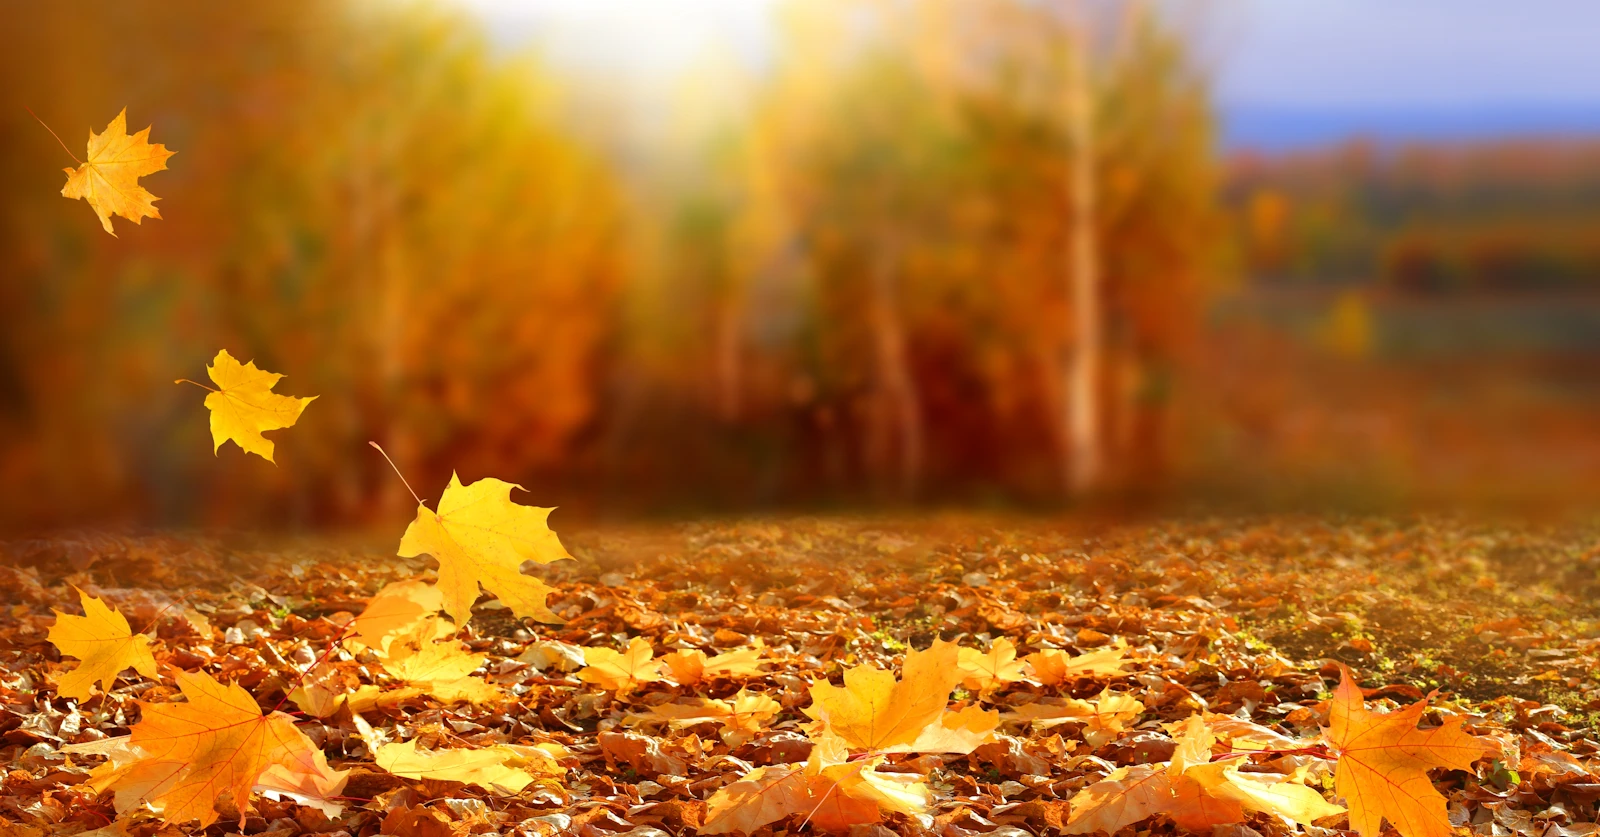 leaves falling in autumn vs fall